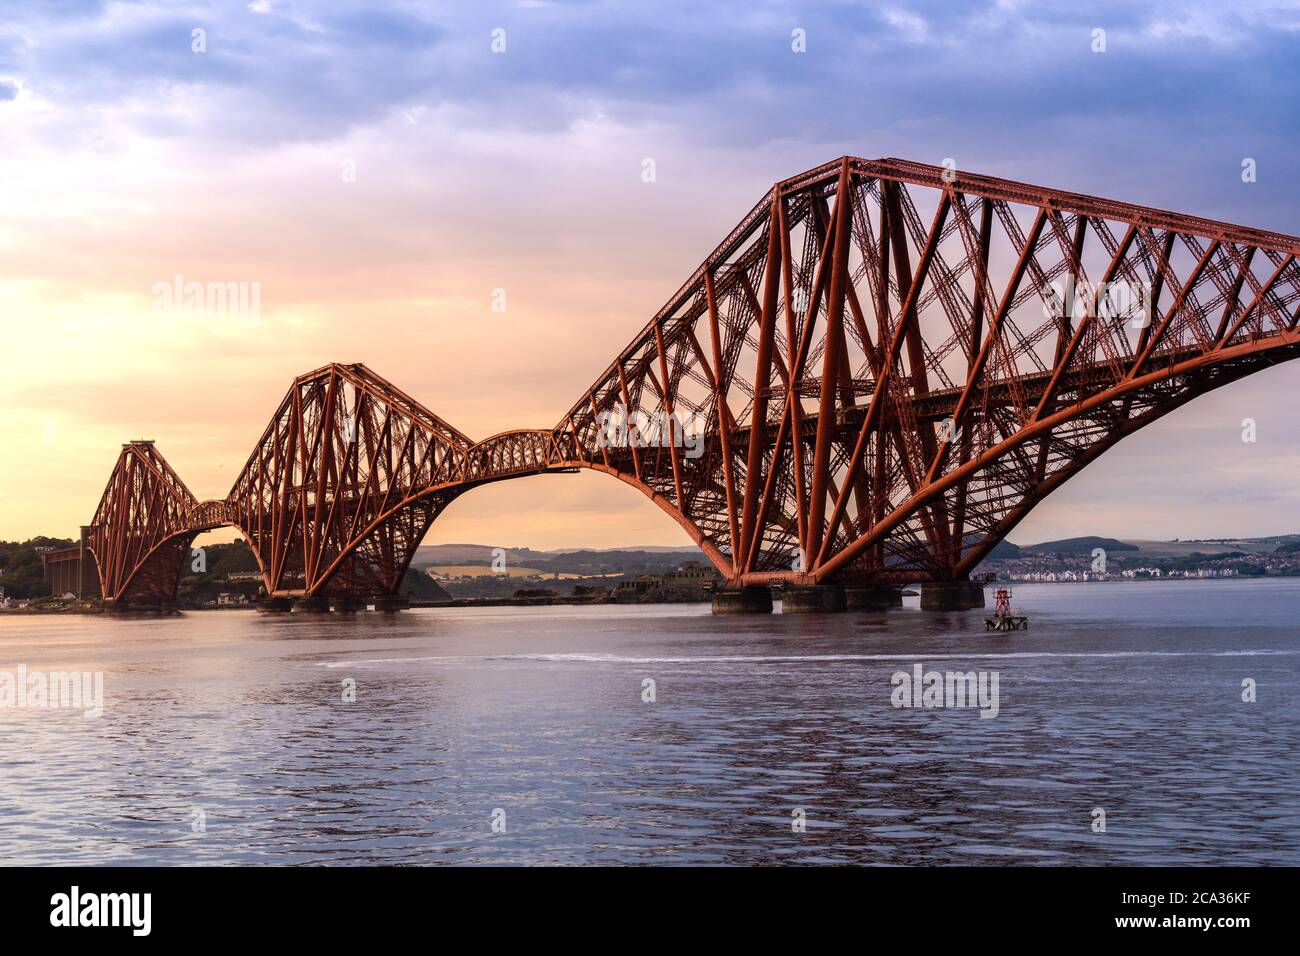 The Forth bridge, UNESCO world heritage site railway bridge in Edinburgh Scotland UK. Stock Photo